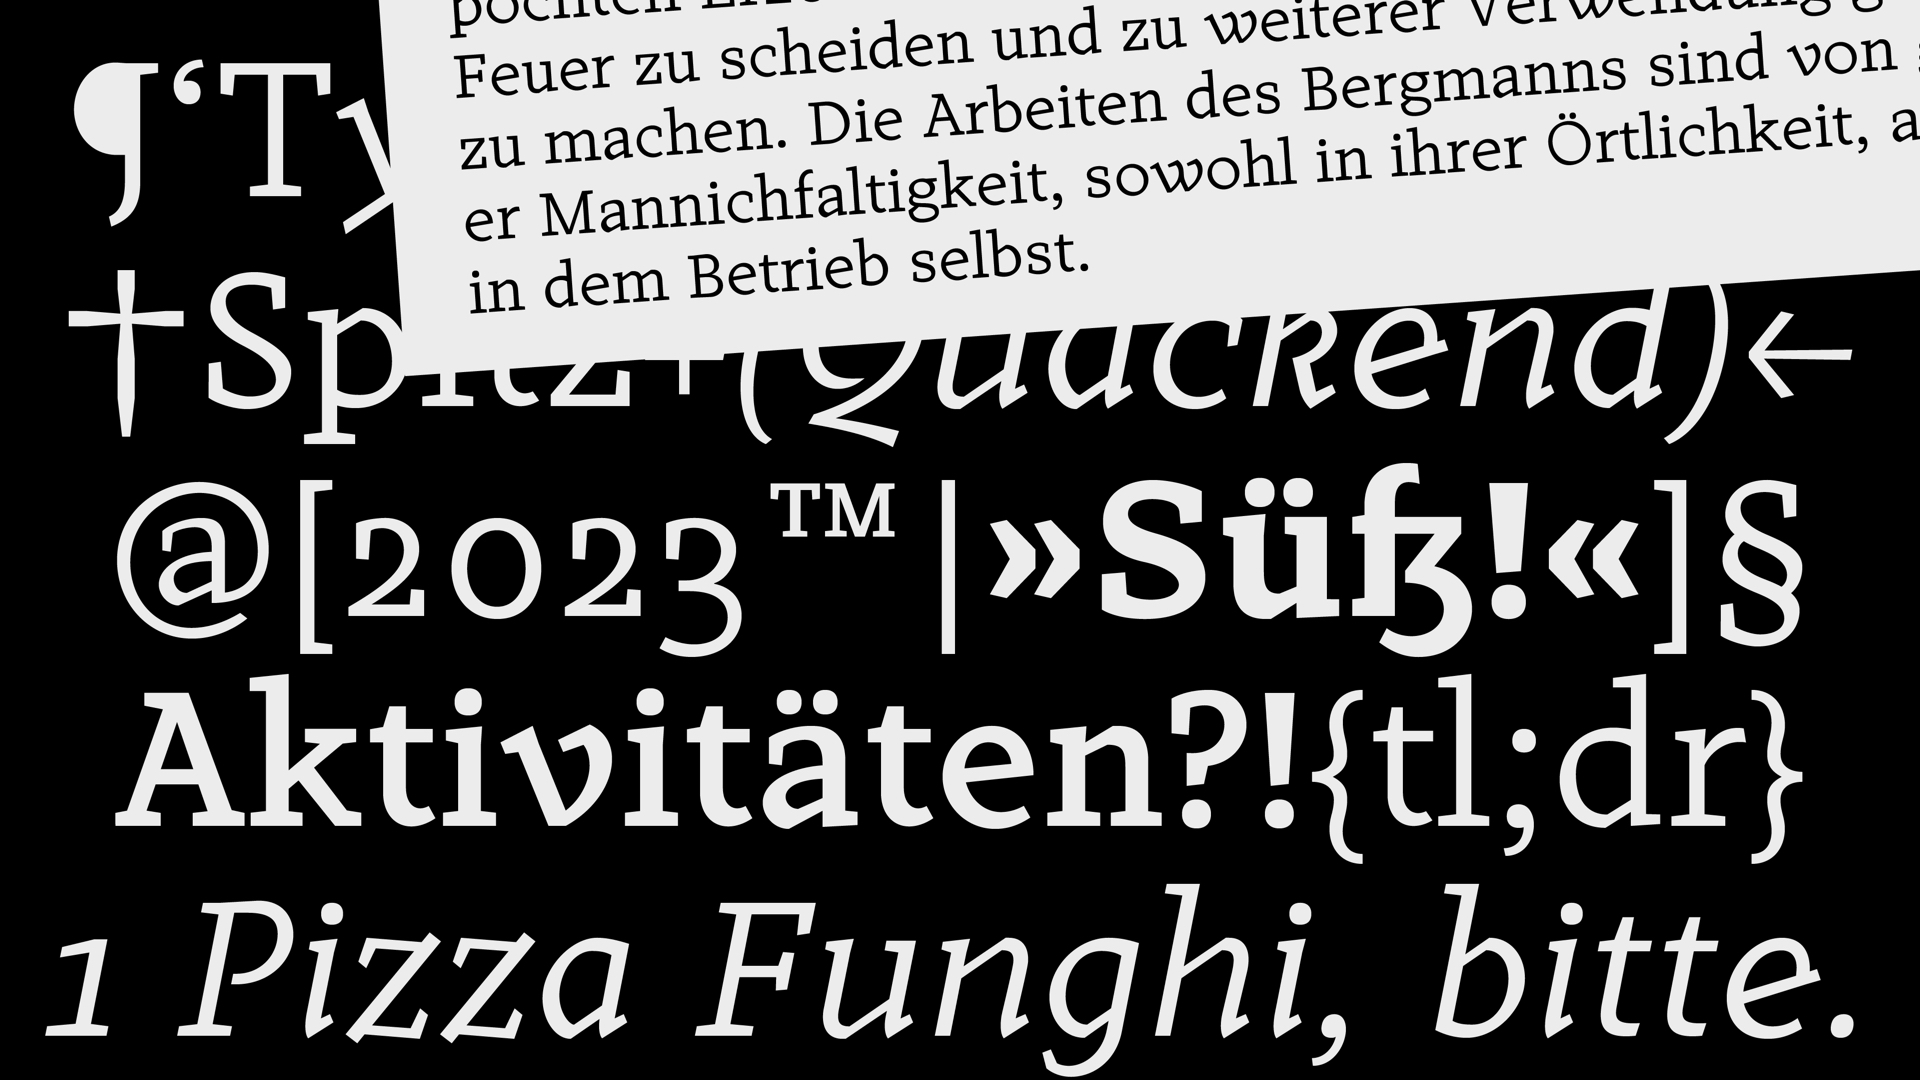 Fritzchen single words, punctuation, and symbols.